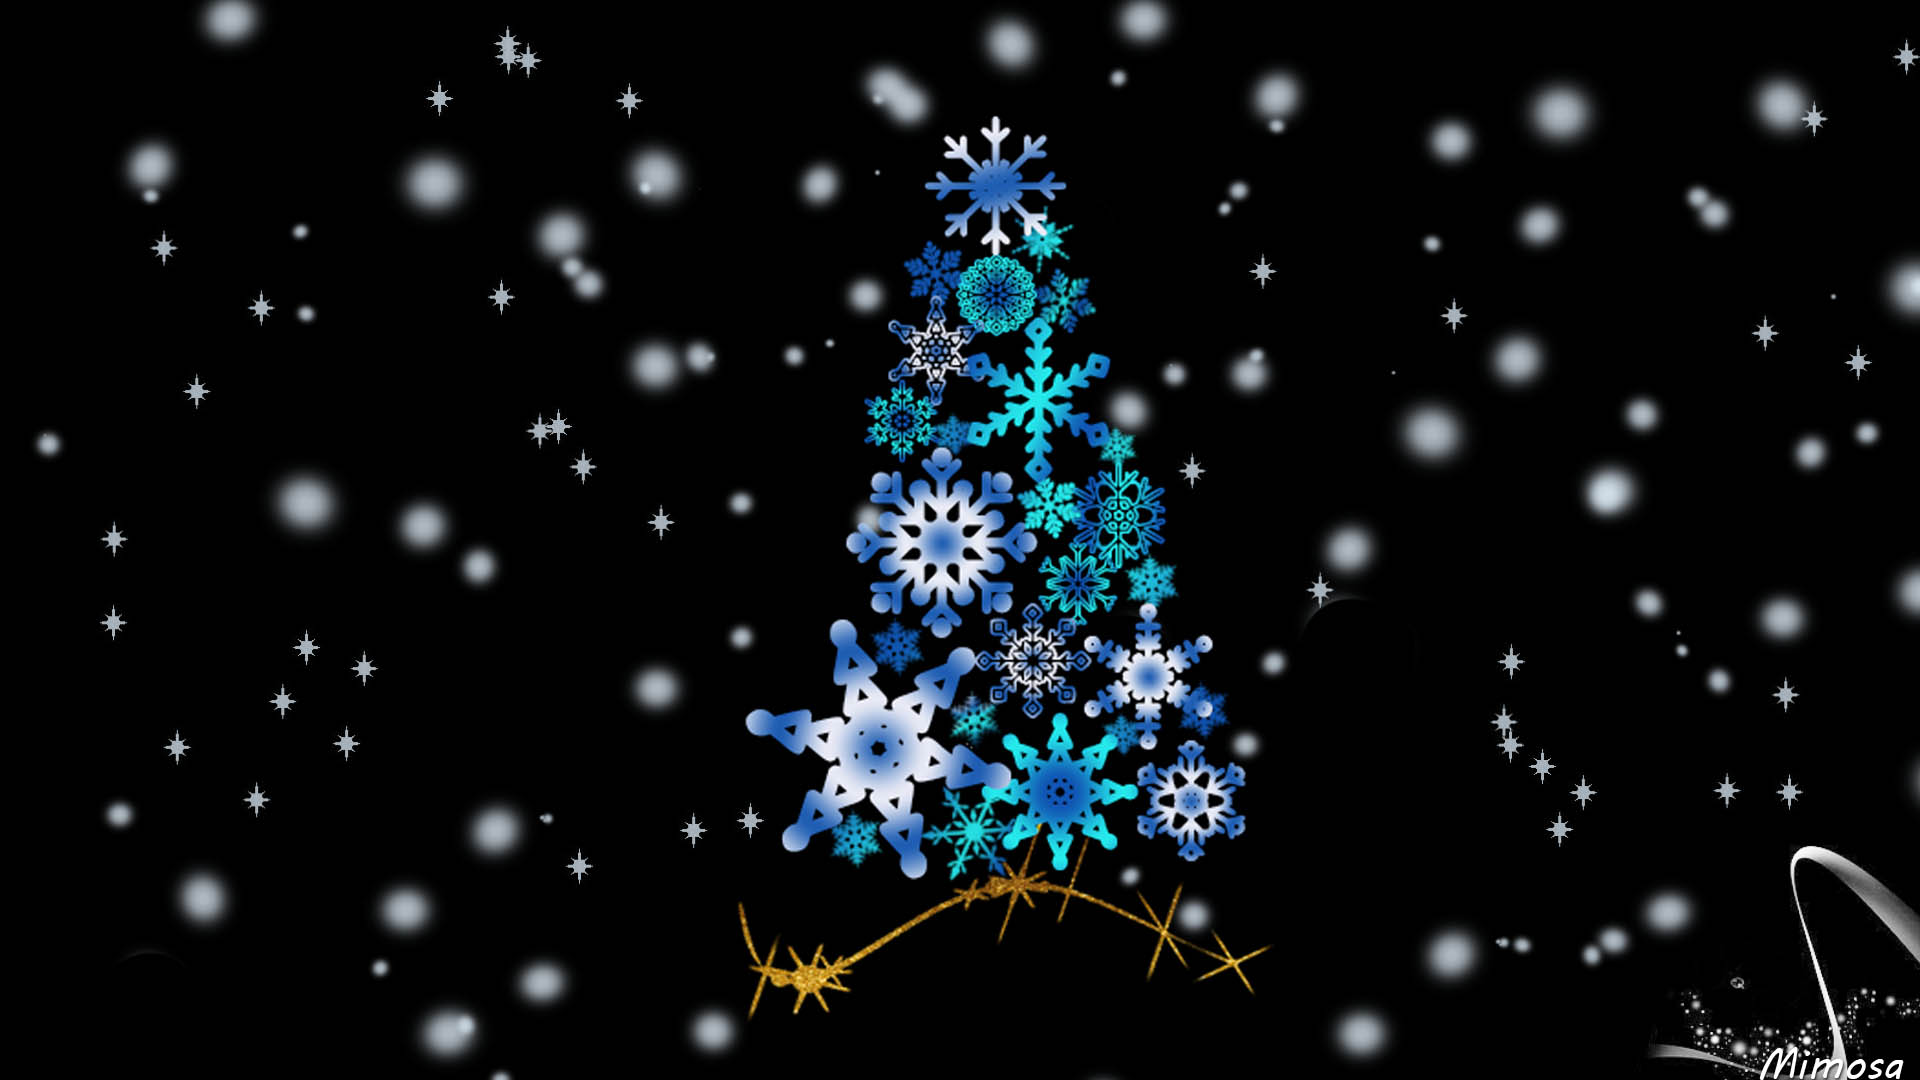 1920x1080 Star, Holiday, Abstract, Snowflake, Blue, Christmas Tree, Artistic, Black, Christmas wallpaper JPG